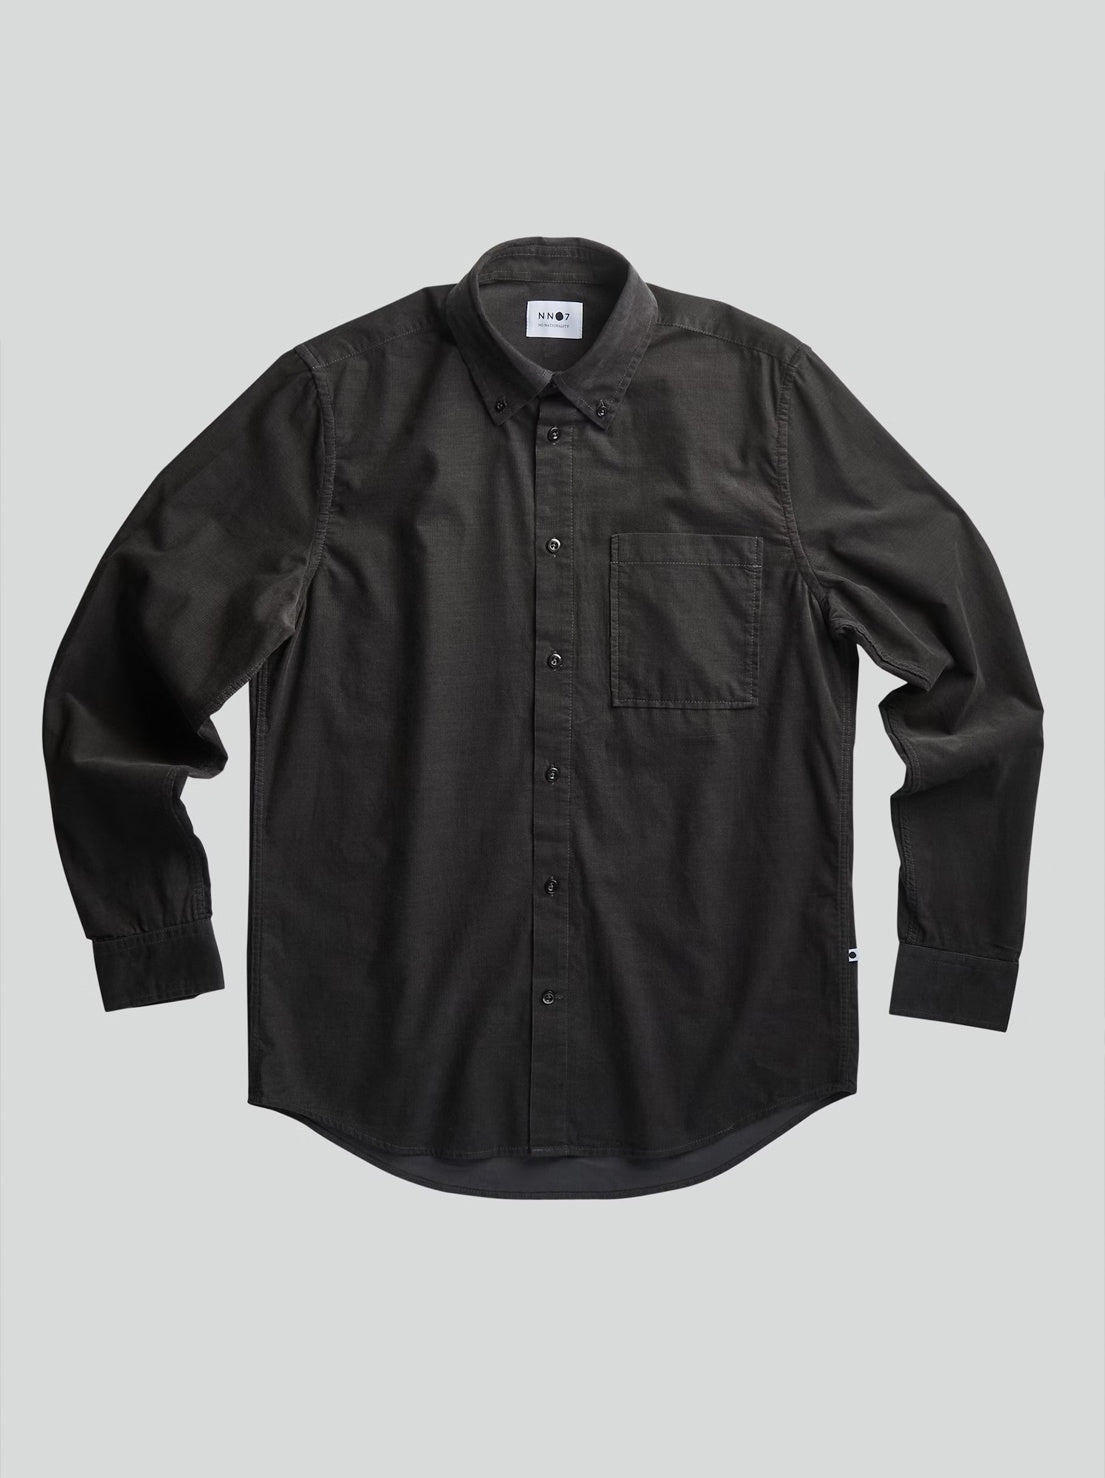 No Nationality - Arne 5723 - Regular Cotton Corduroy Shirt - Dark Army